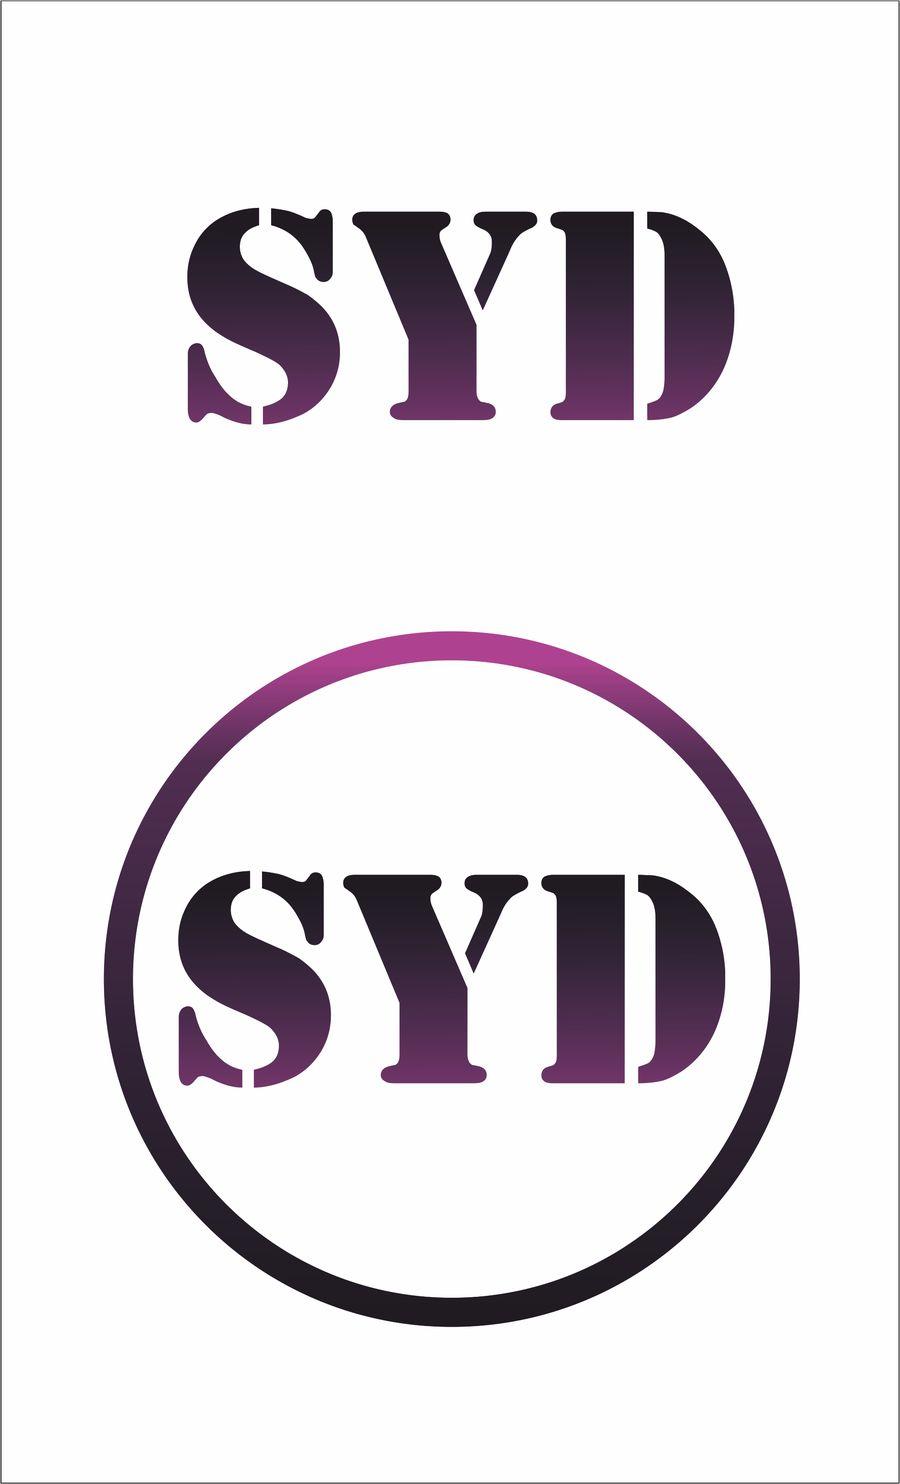 35 Logo - Entry by Ketrin3434 for Sy Digital Logo Design round